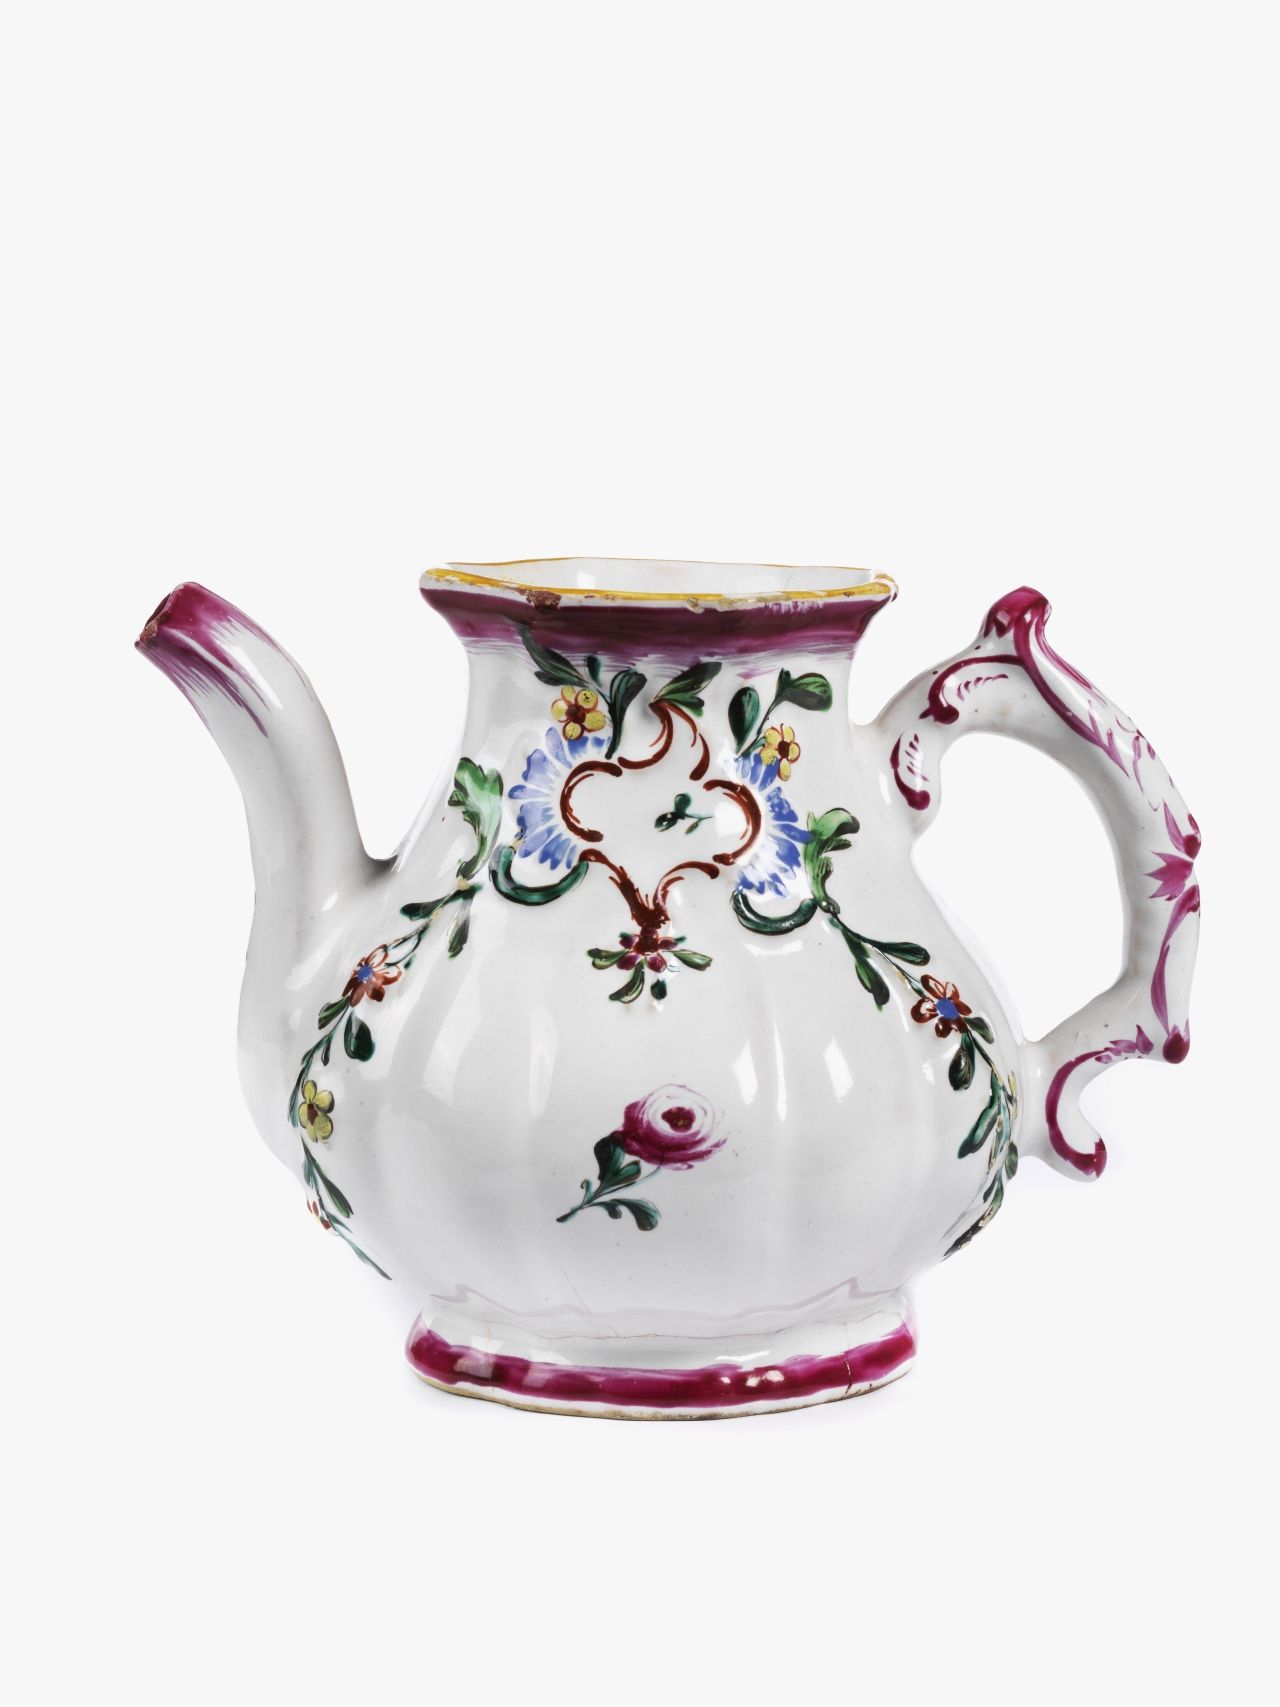 holics-faience-tea-pot-18th-century